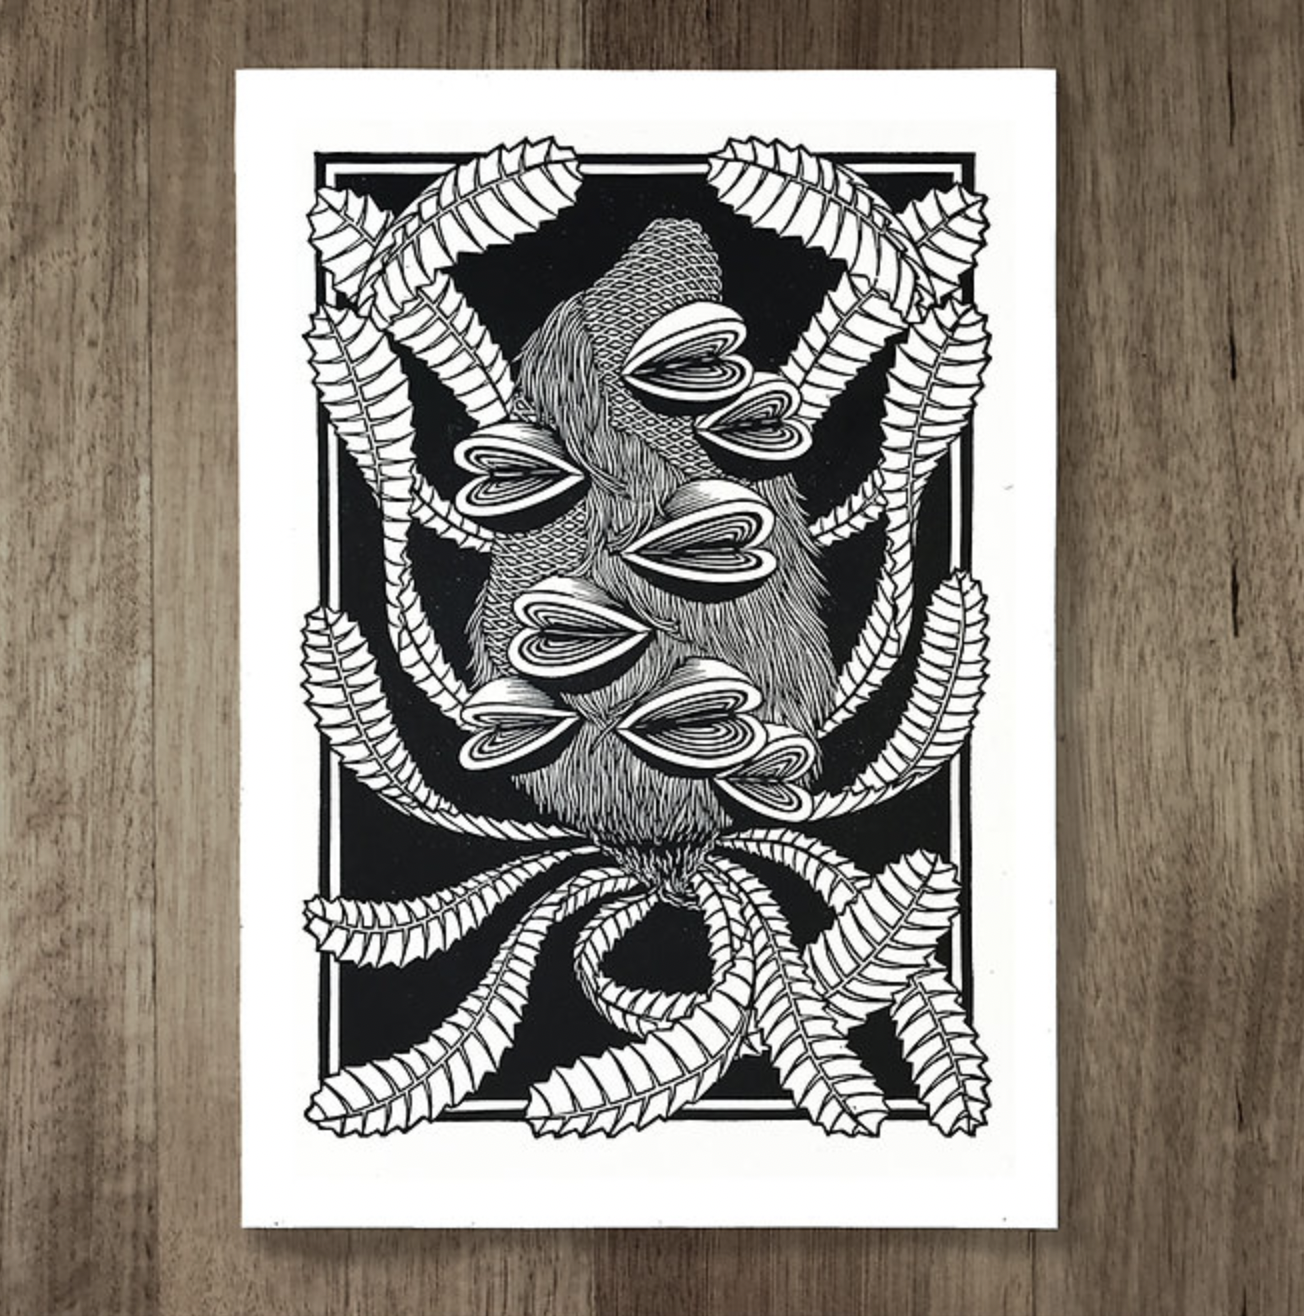 Catherine Arsaut - Art Print A4 - Banksia Serrata - Black on White